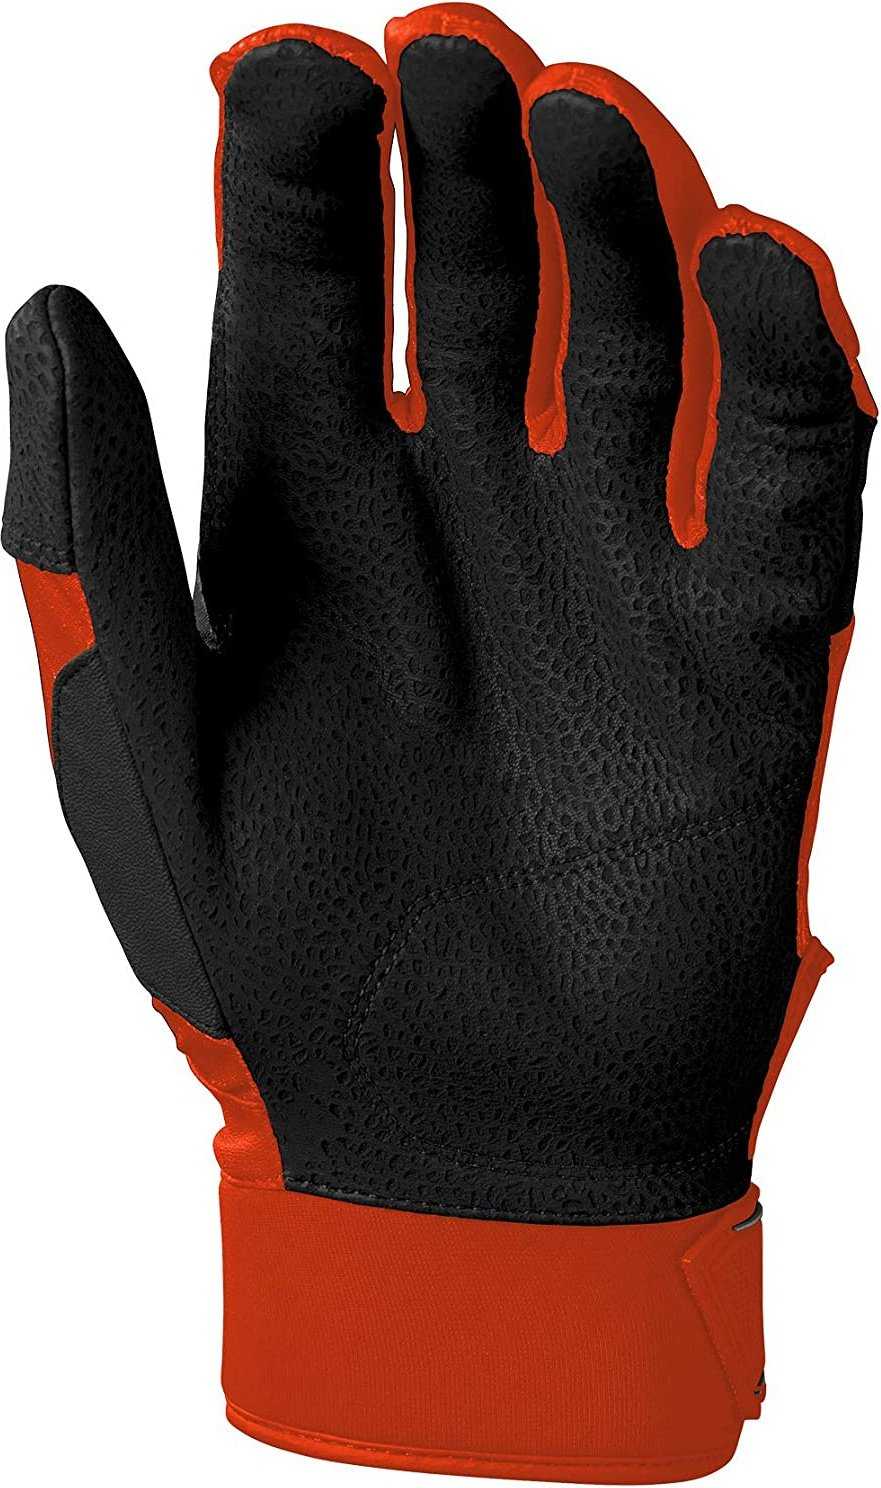 EvoShield Adult Evo Standout Batting Gloves - Orange - HIT A Double